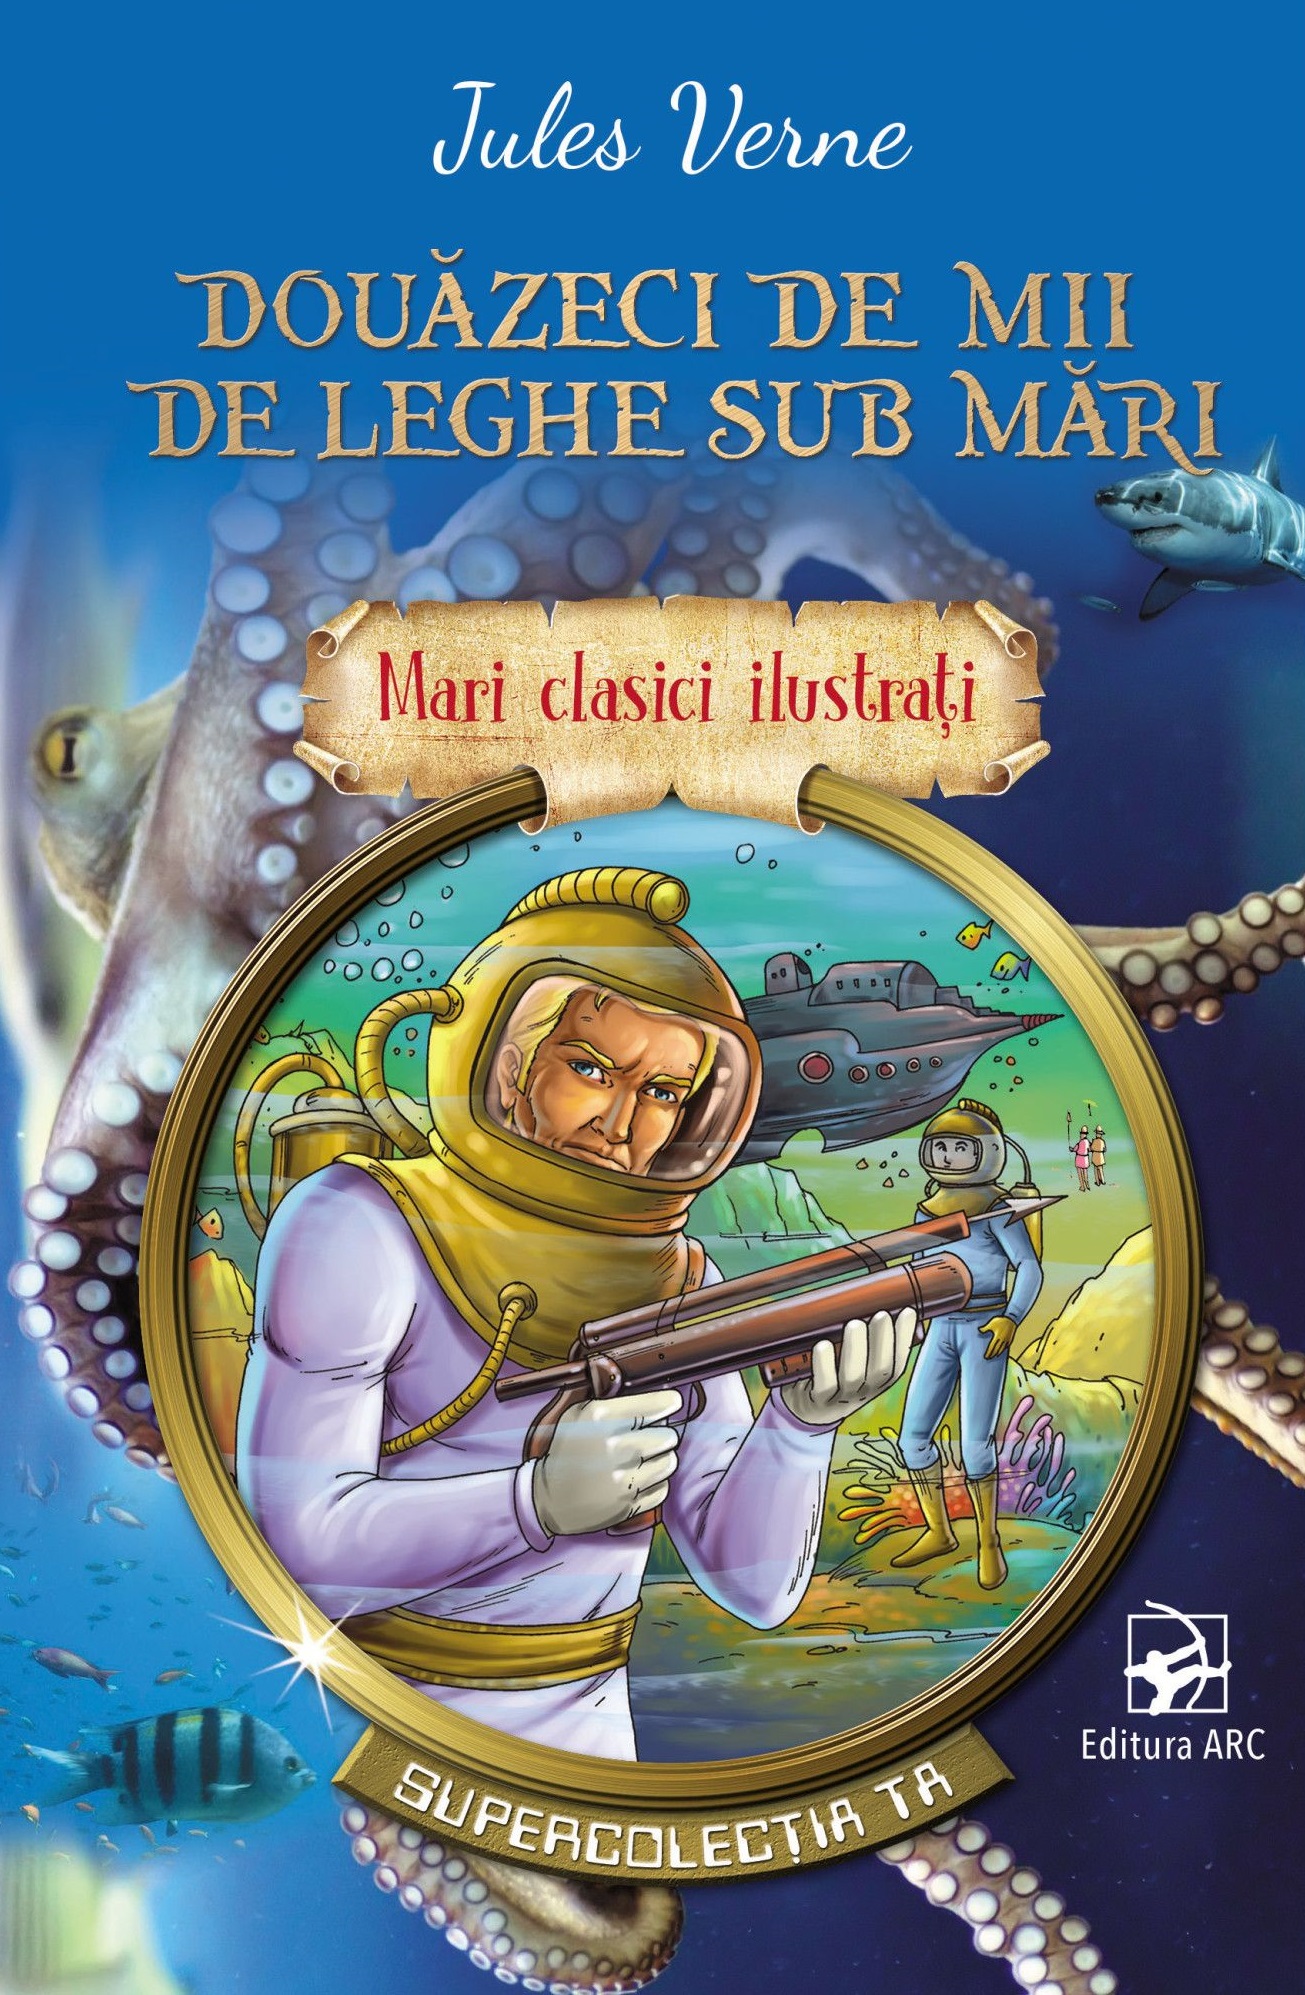 PDF Douazeci de leghe sub mari | Jules Verne ARC Bibliografie scolara